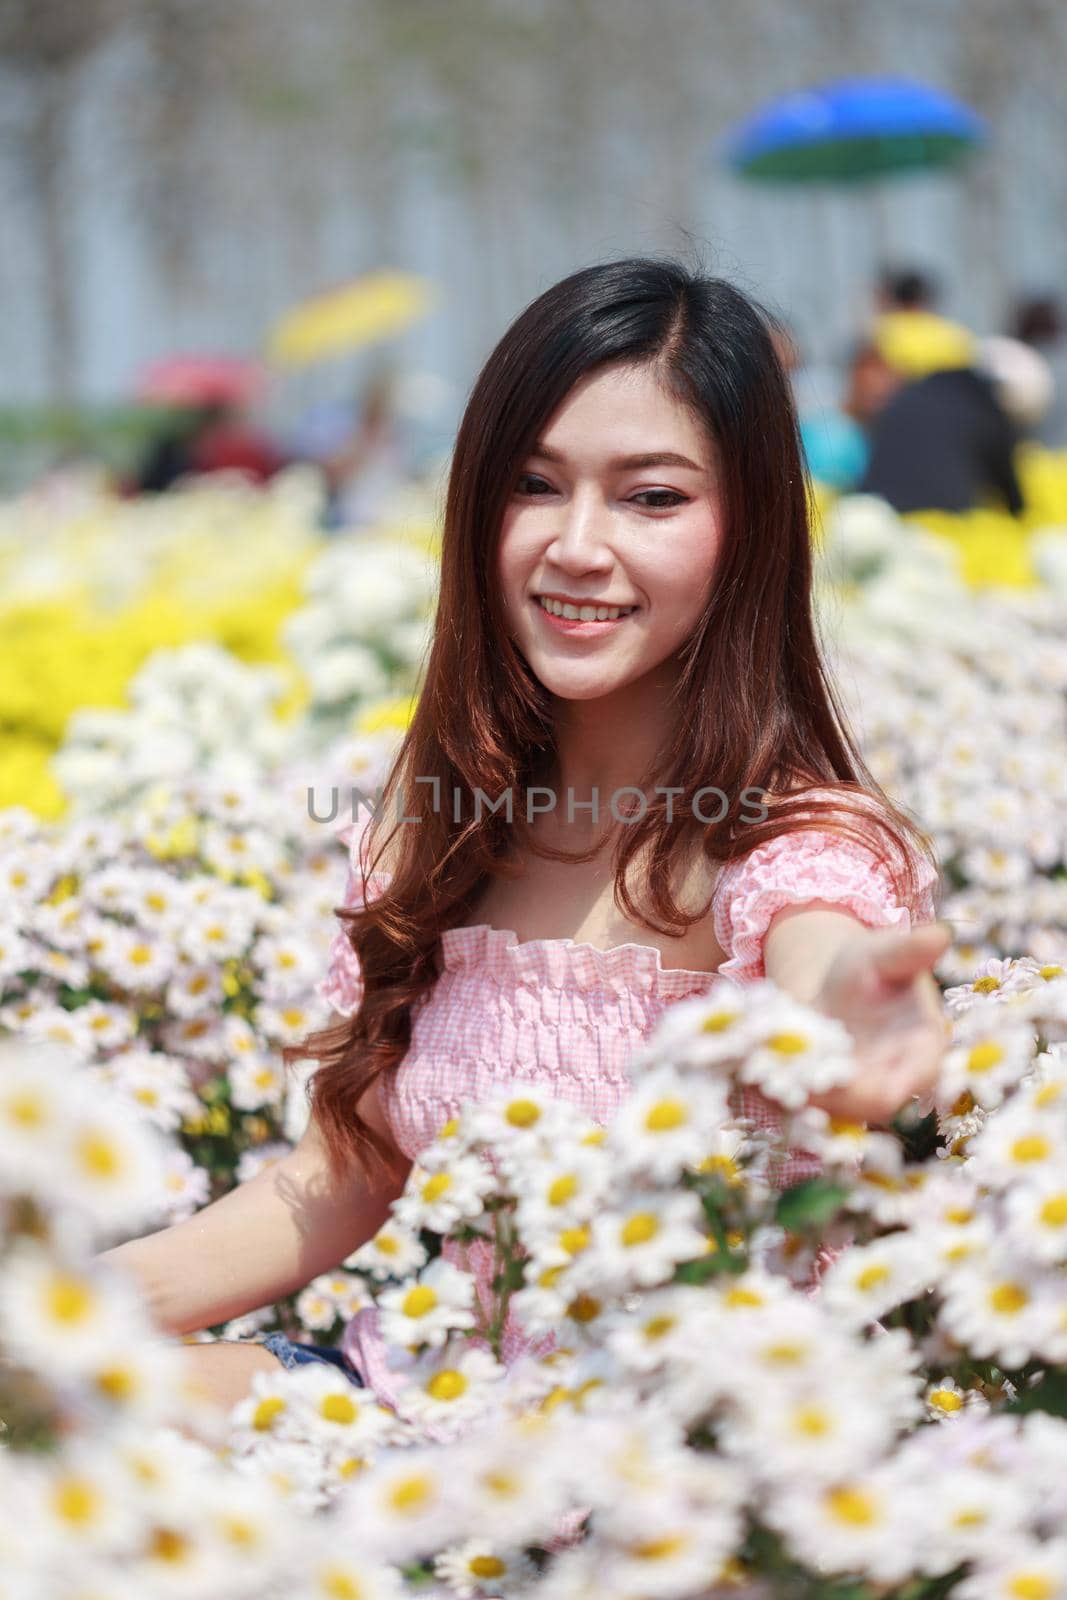 beautiful woman in colorful chrysanthemum glower garden 